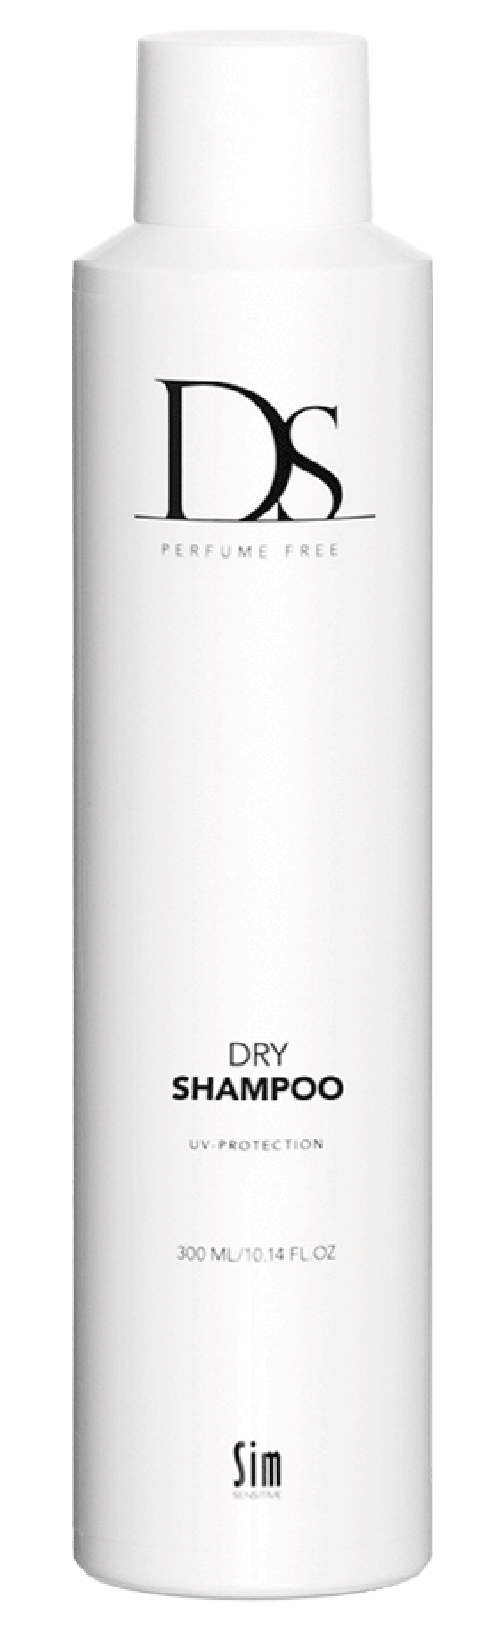 DS Dry Shampoo сухой шампунь 300 мл 